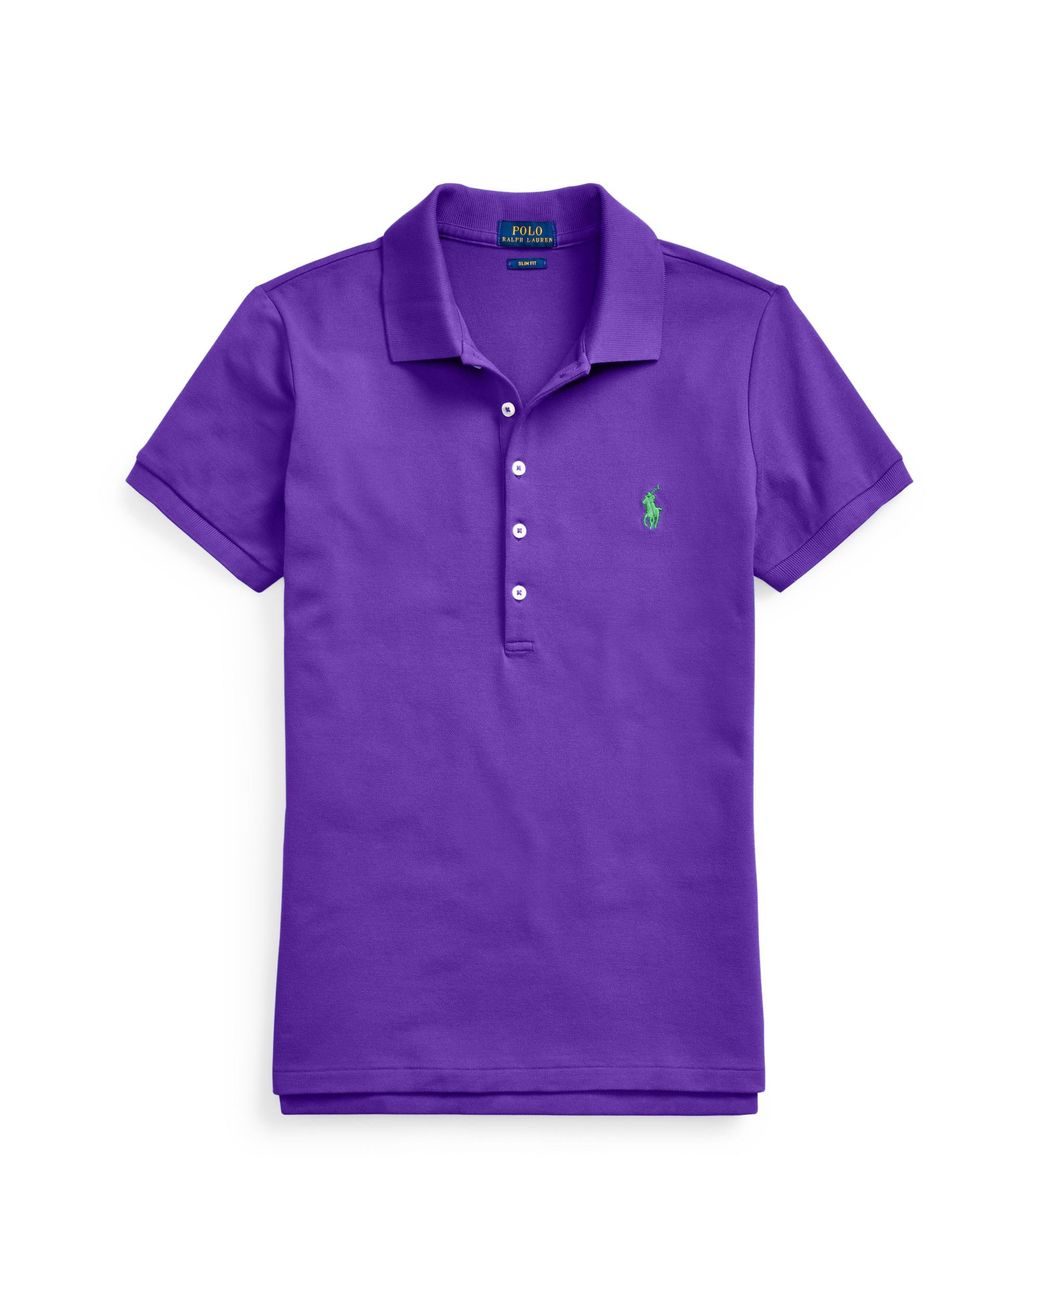 Polo Ralph Lauren Cotton Slim Fit Polo Shirt in Purple - Lyst